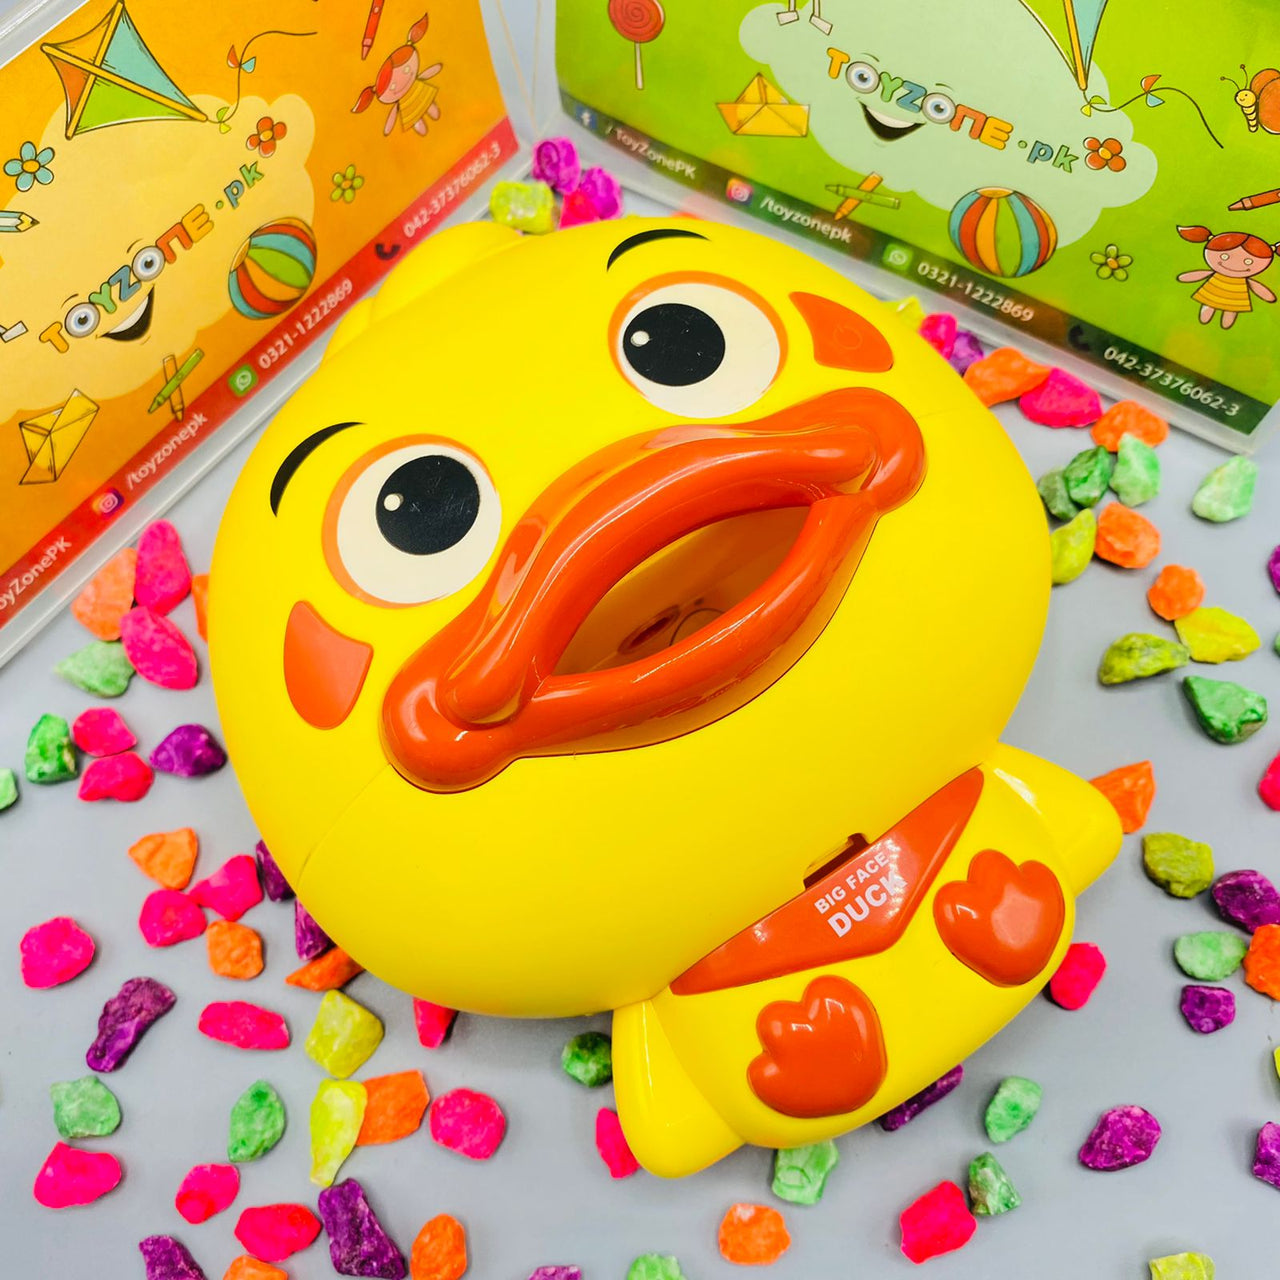 duck-shaped-bubble-bath-toy